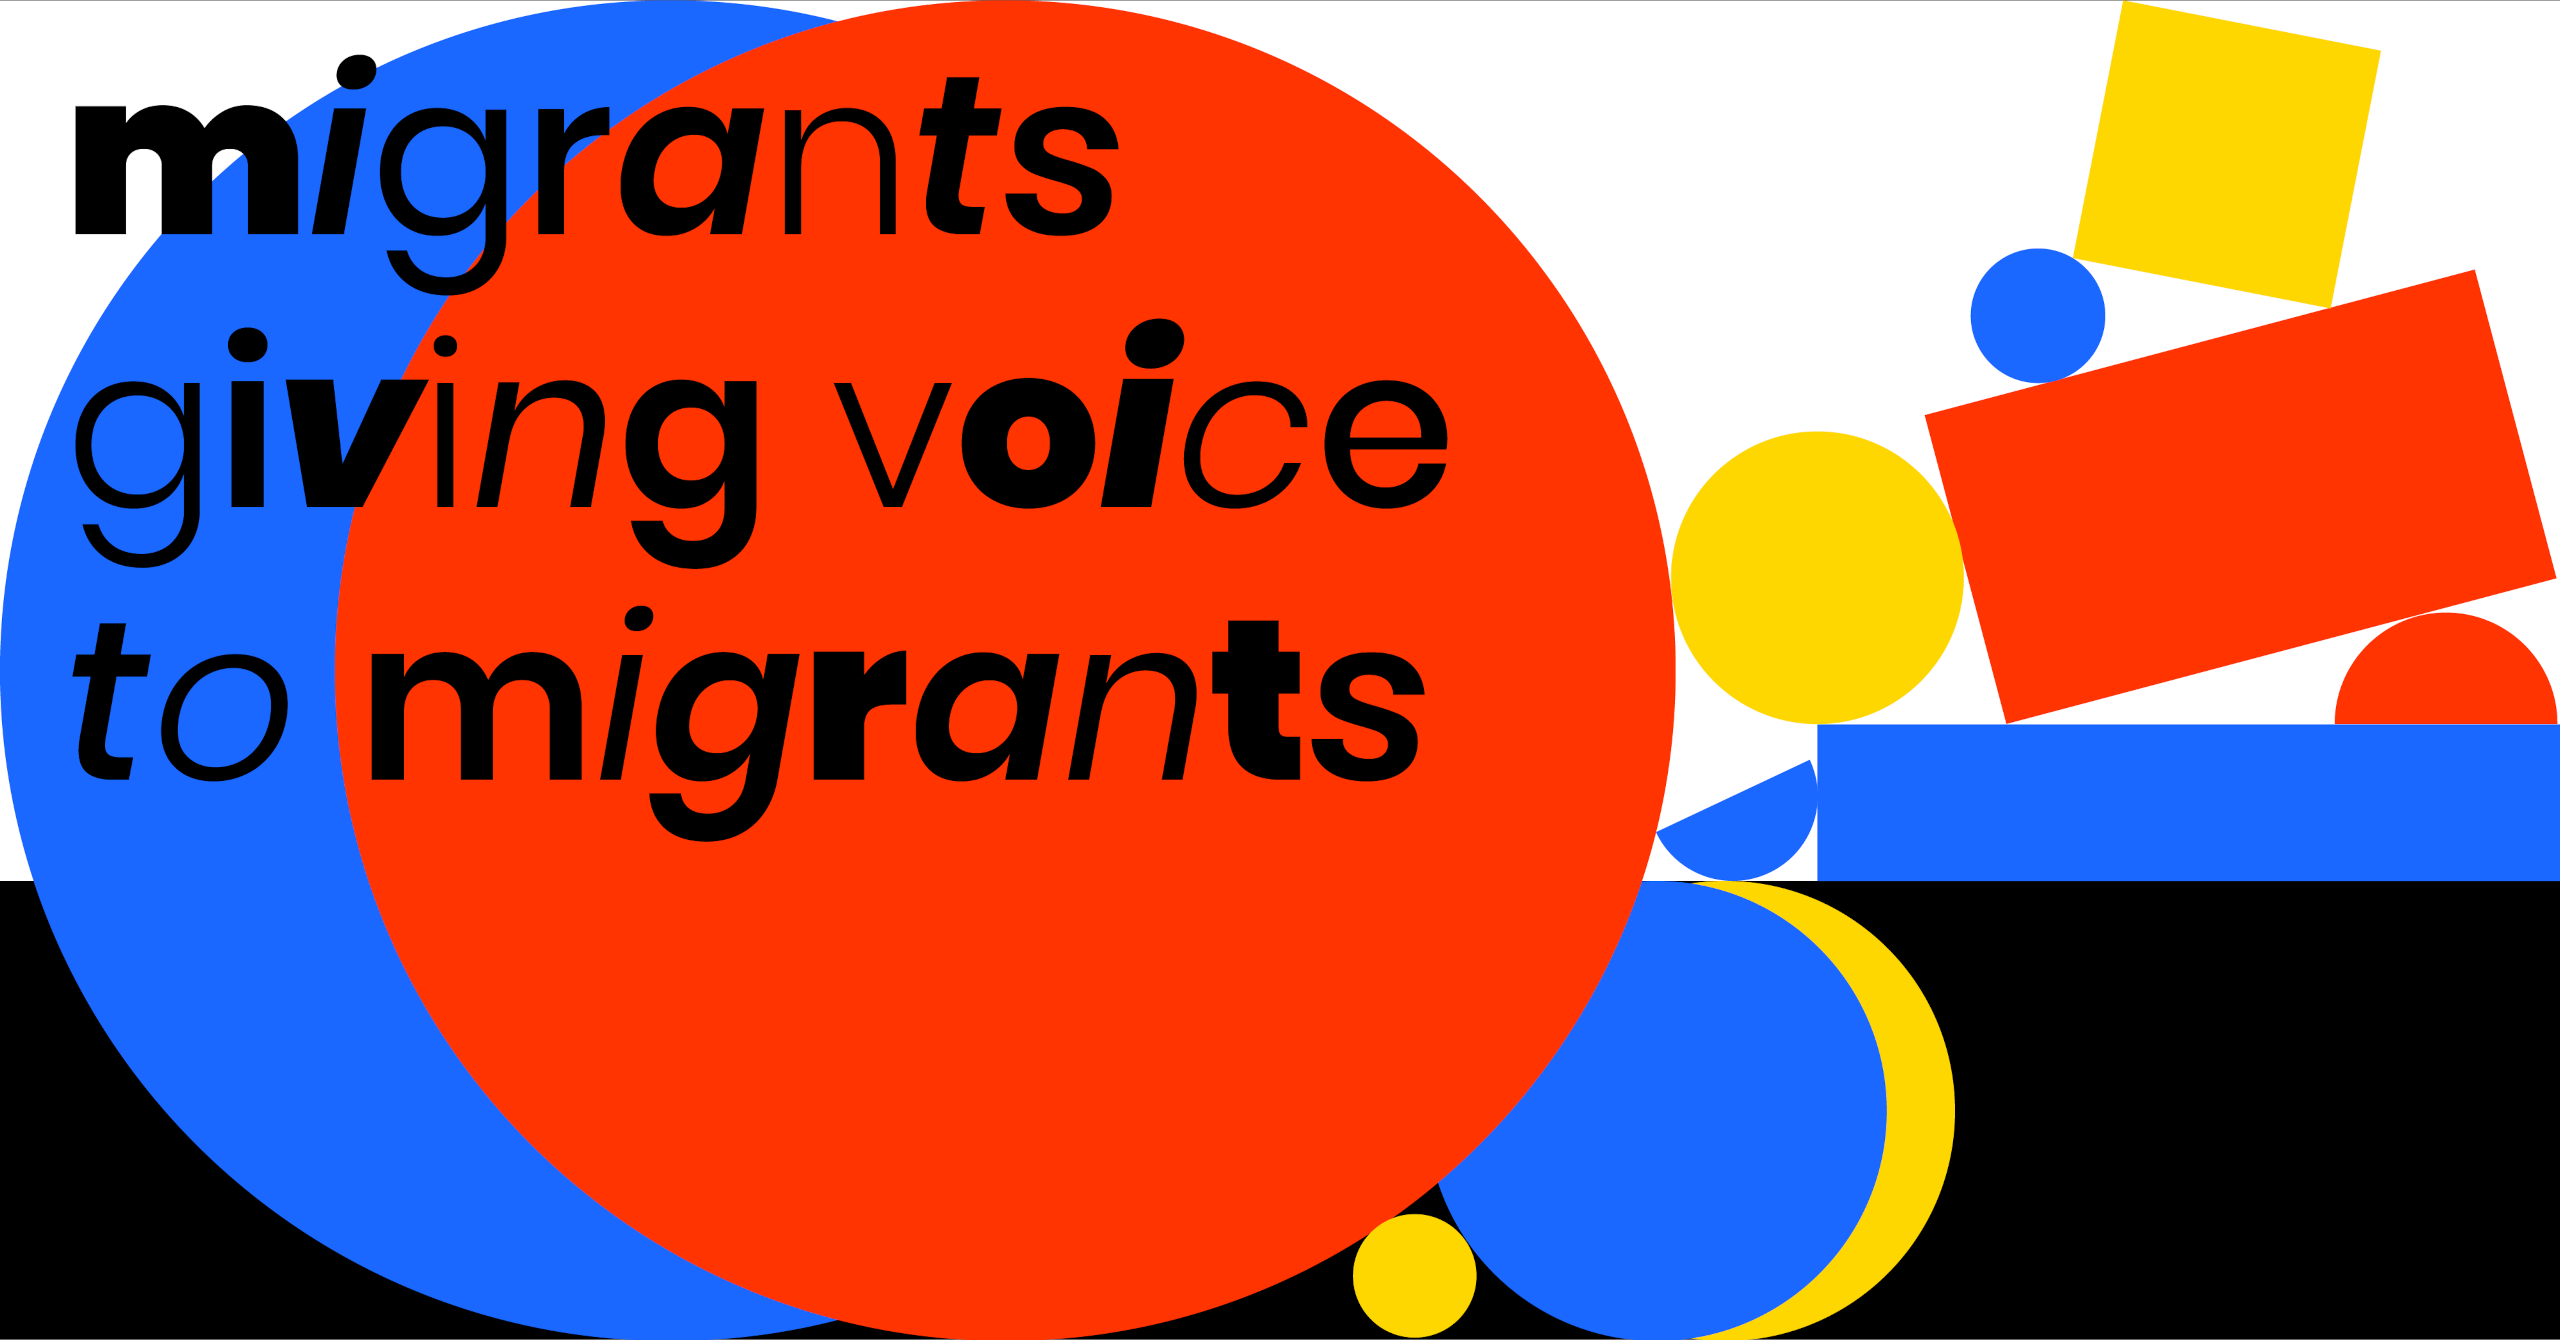 migrants giving voice to migrants